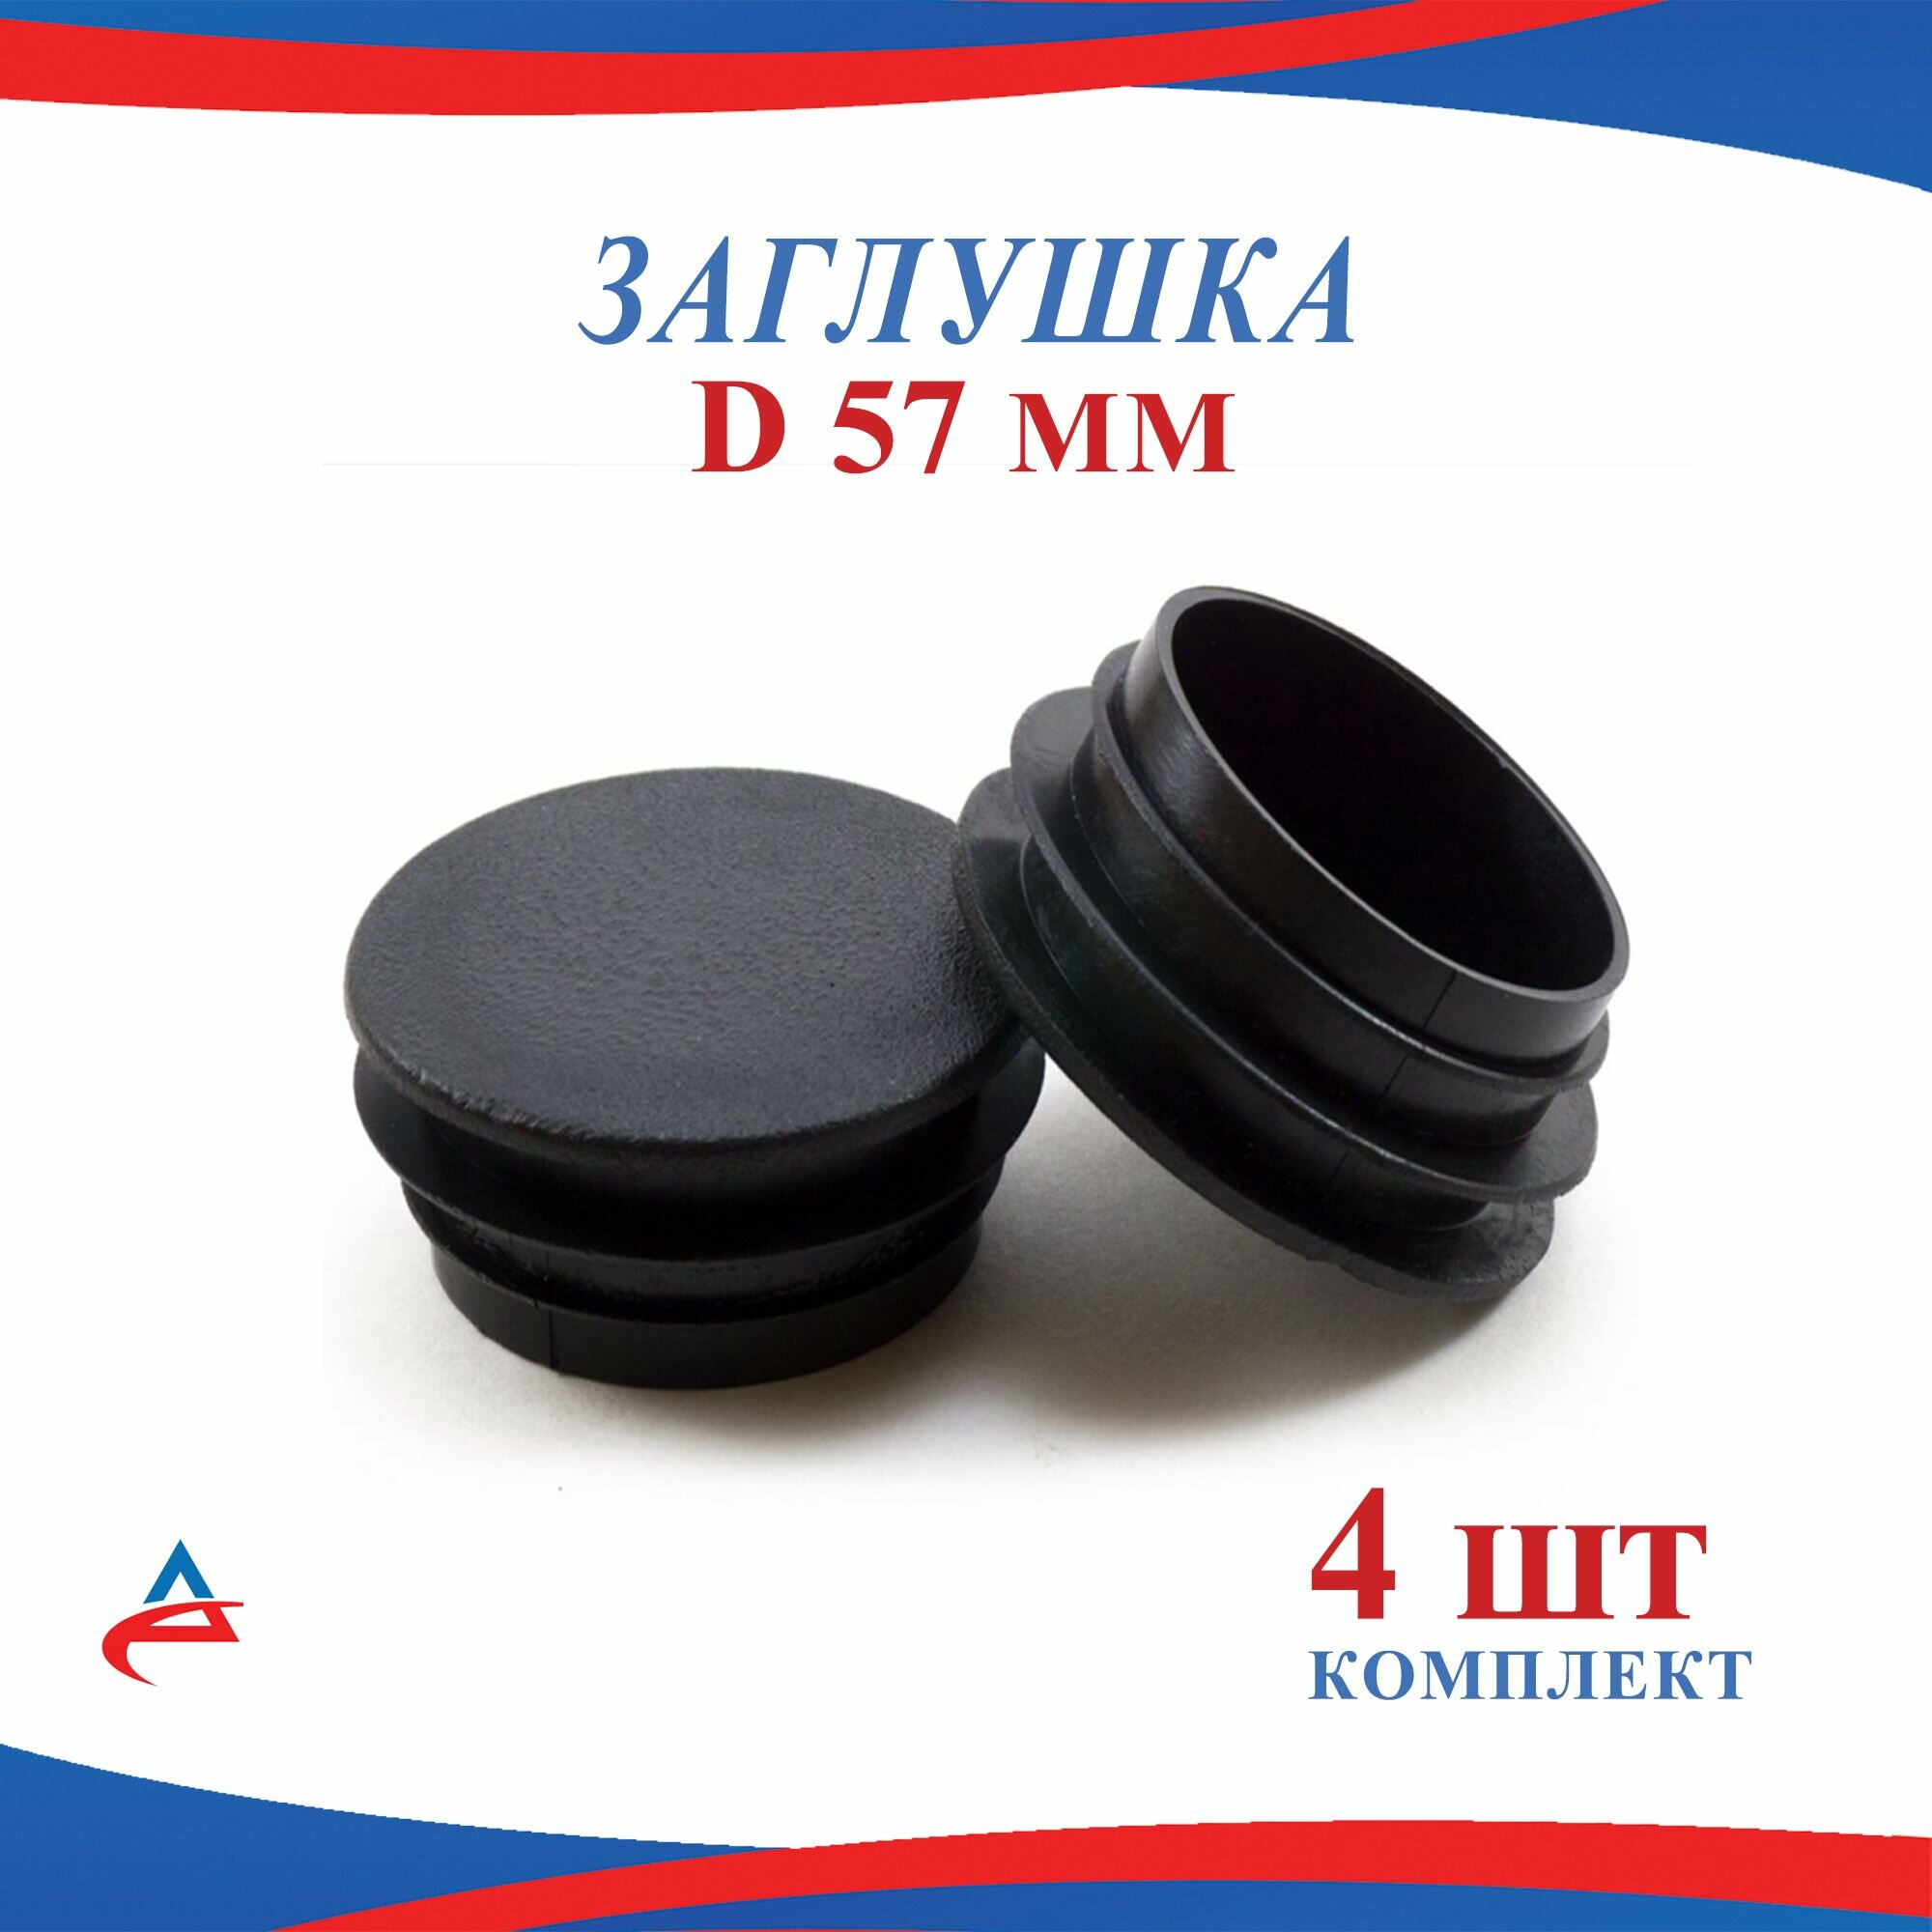 Заглушка Д 57 мм диаметром пластиковая для круглой трубы D 57мм (4шт) черная